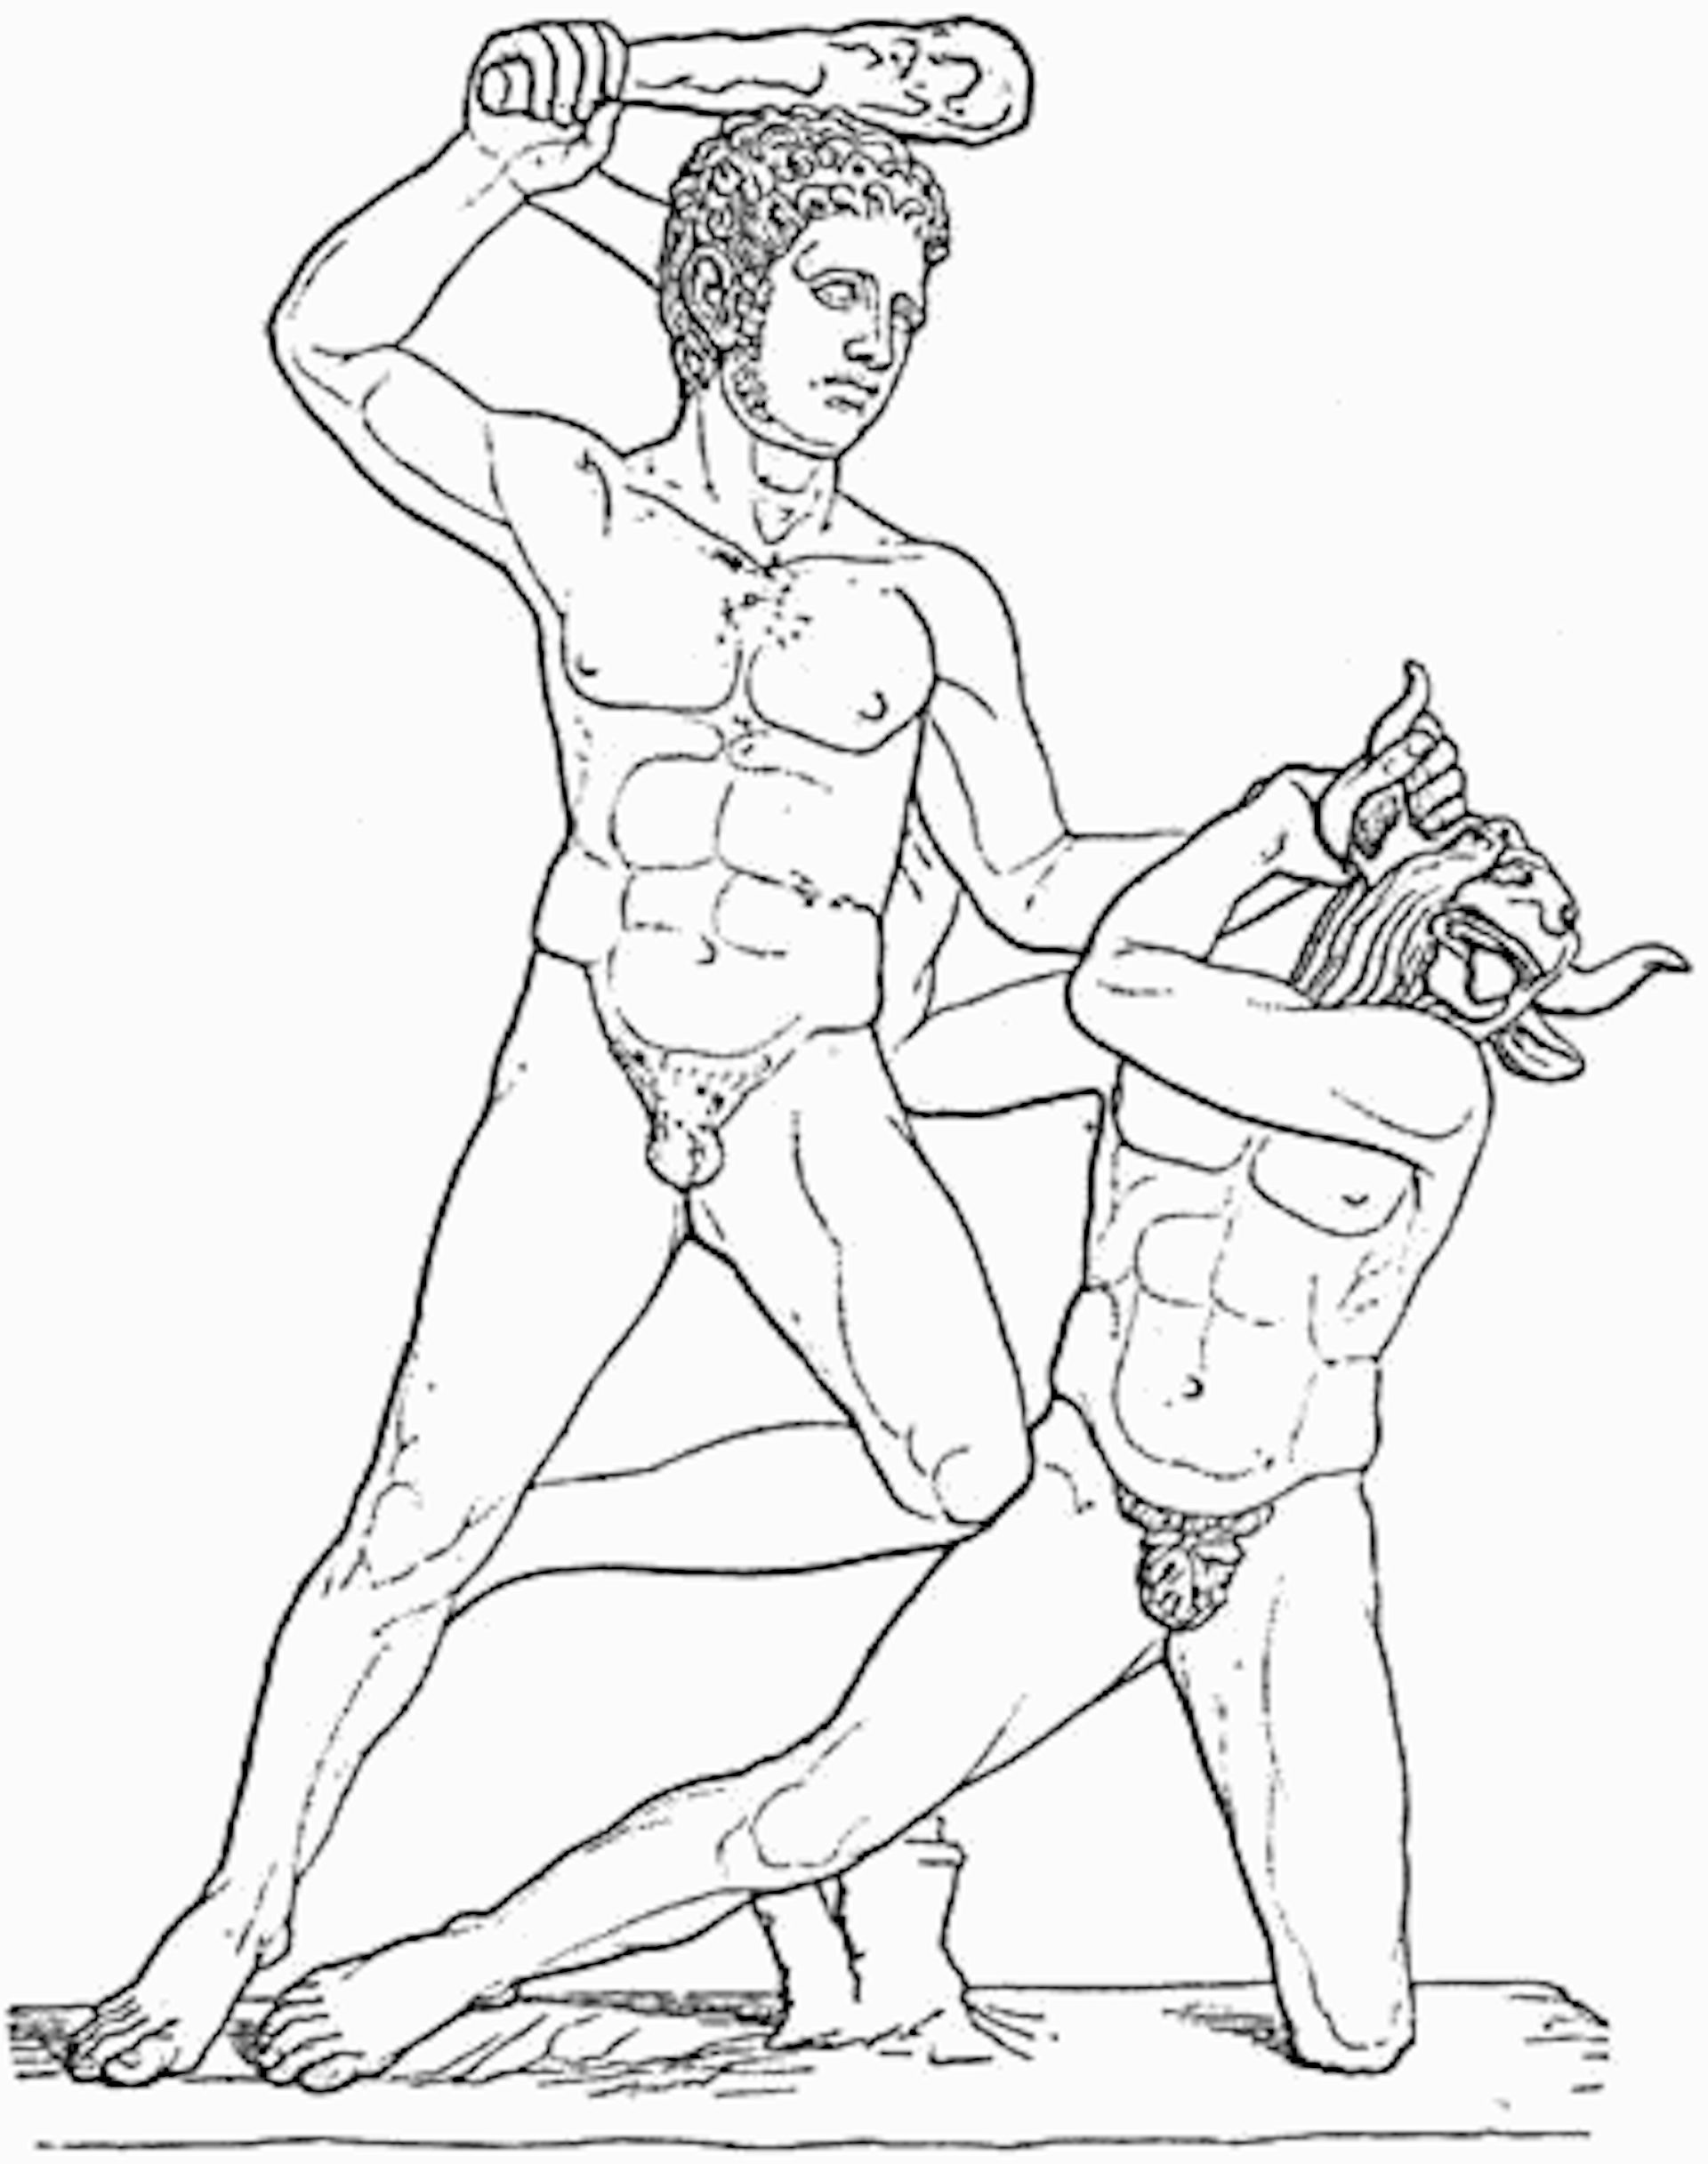 Theseus und Minotauros Meyers konversationslexikon